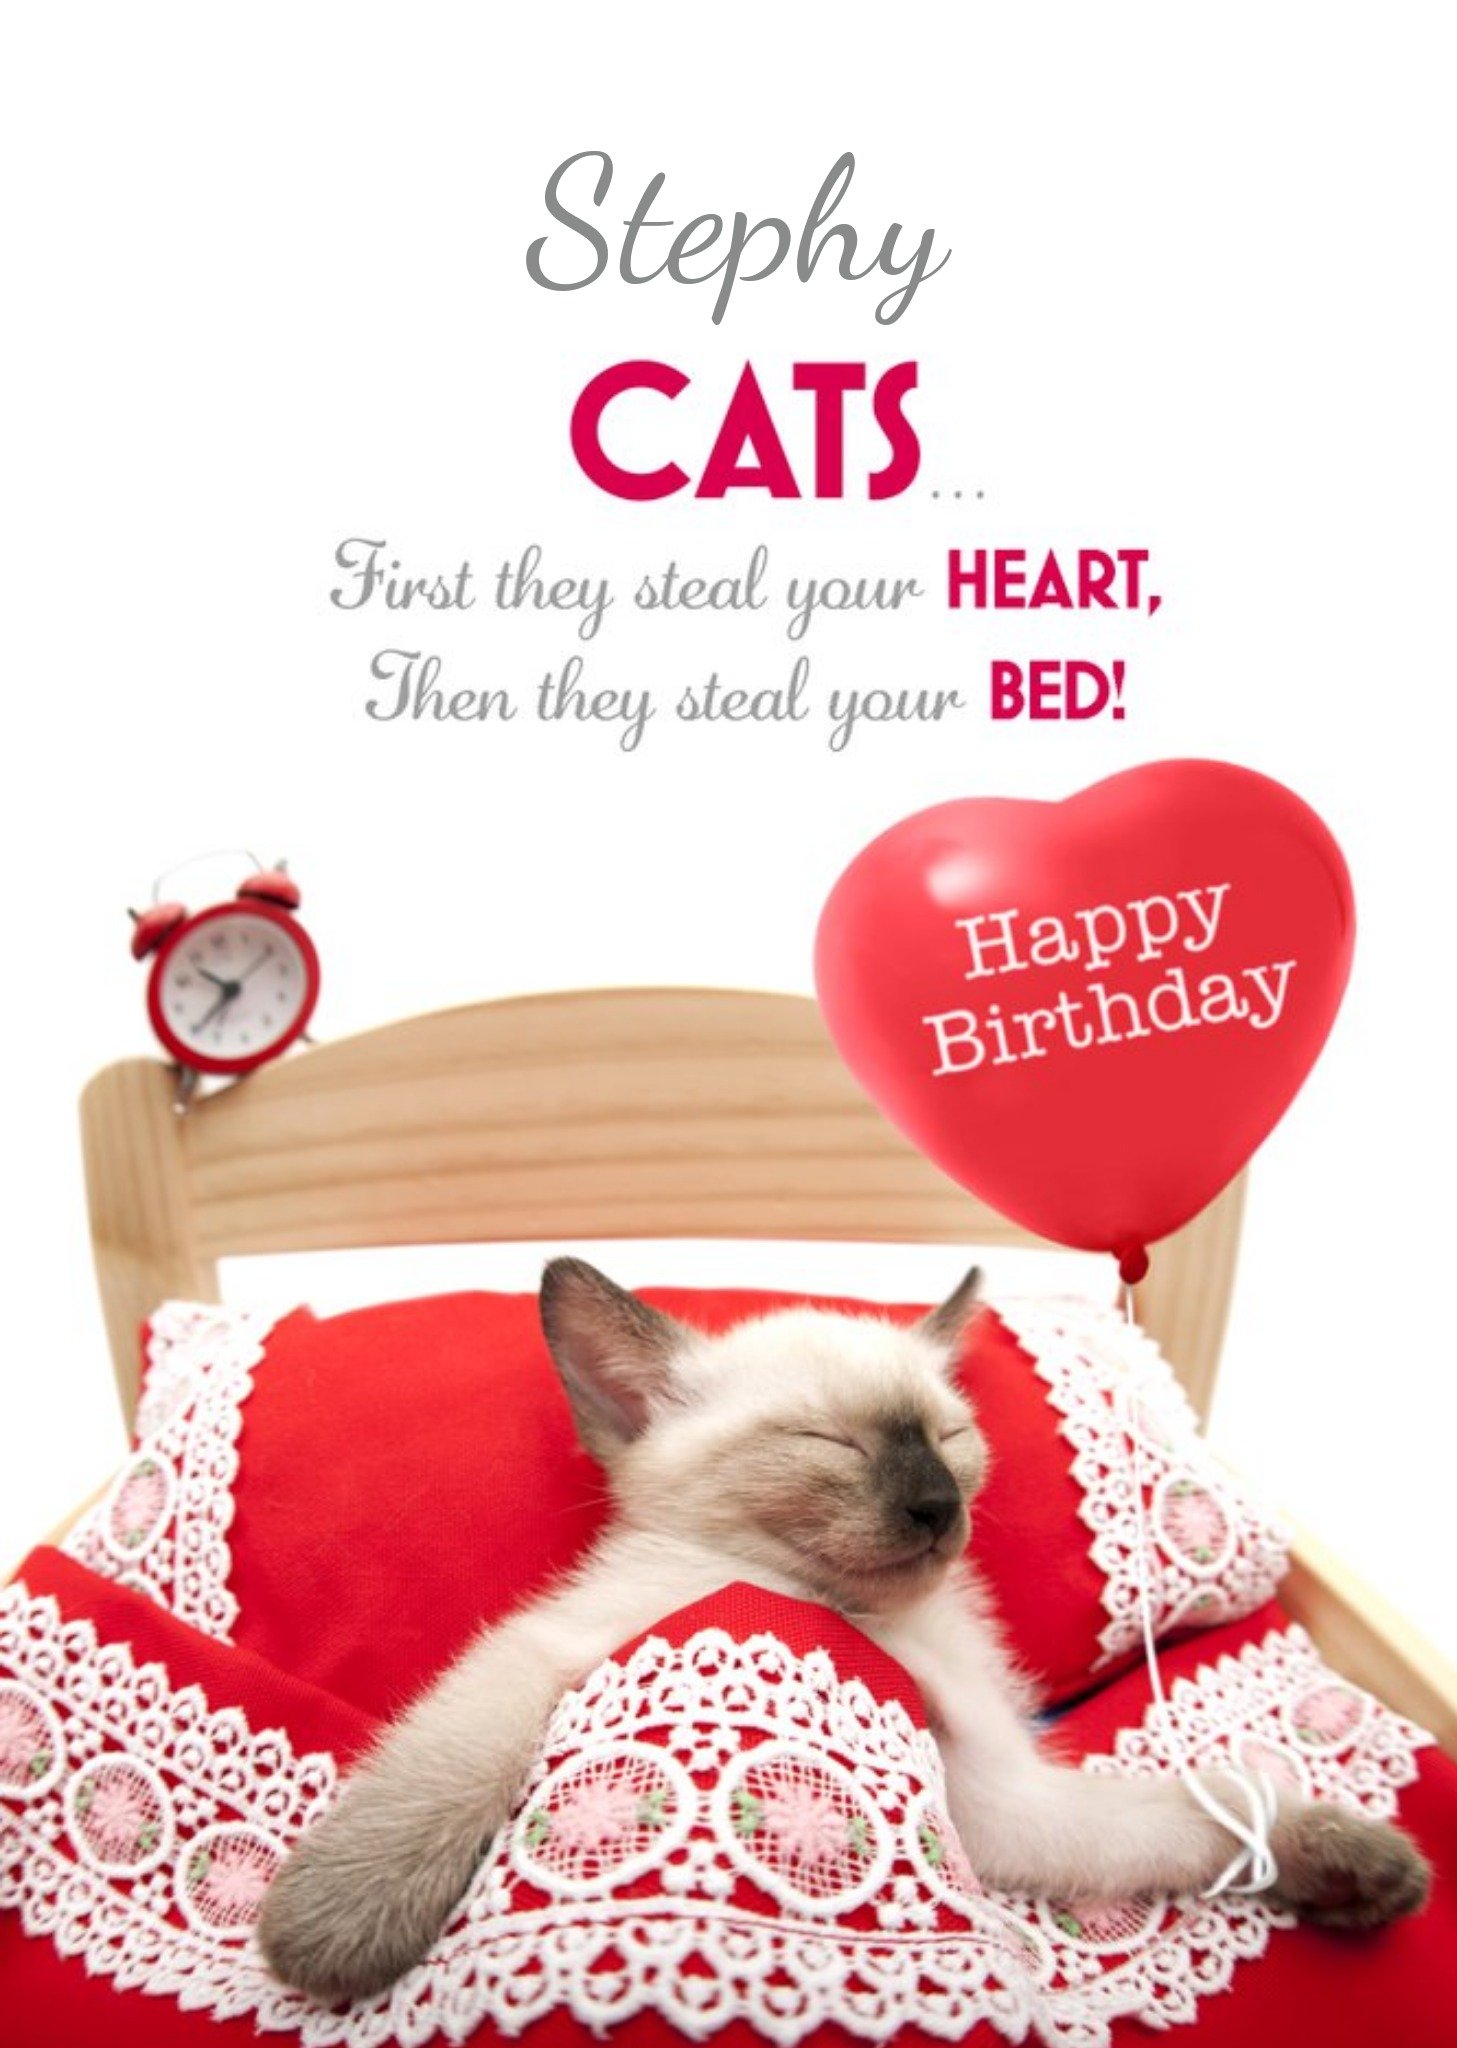 Moonpig Sleepy Cat With Heart Balloon Personalised Happy Birthday Card Ecard